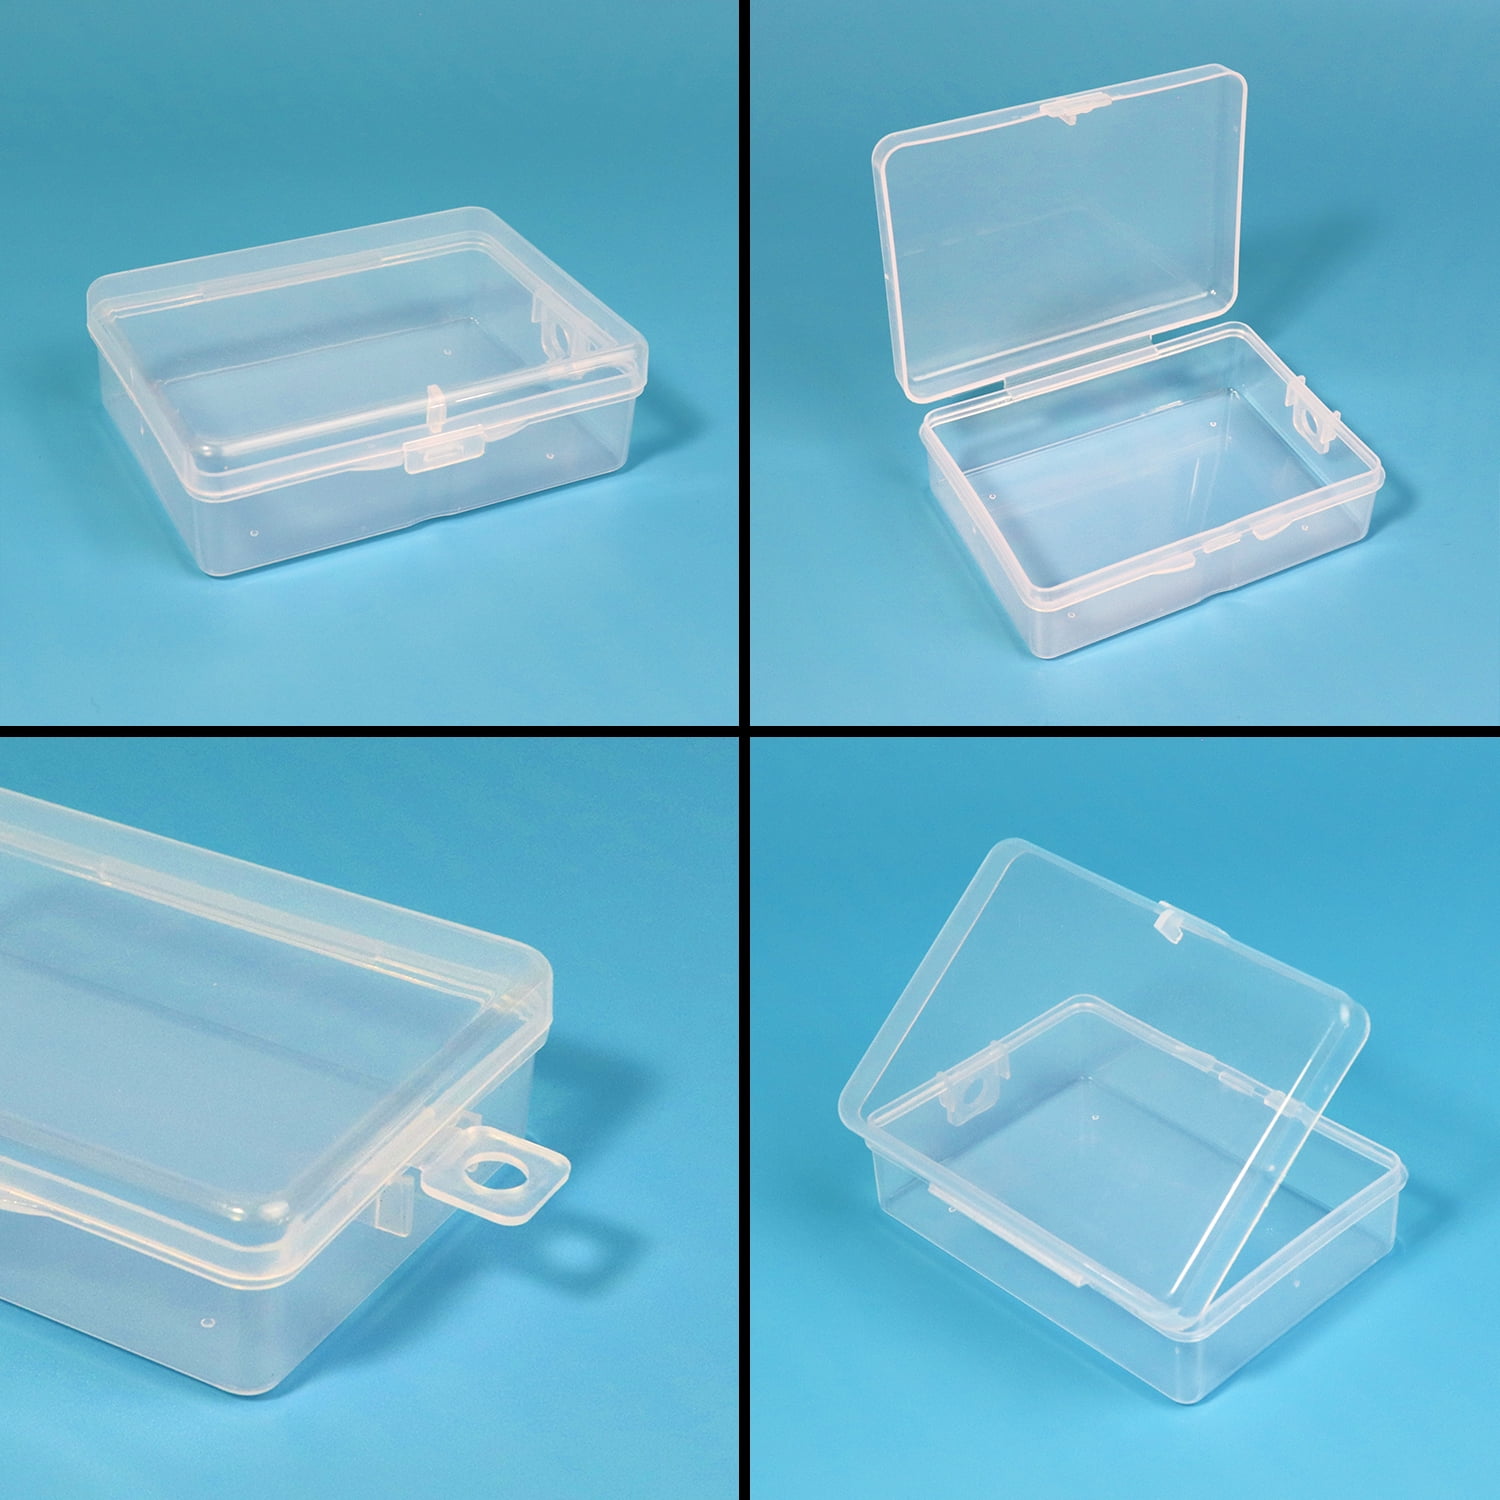 1 x 1 x 3/4 Hinged Lid Clear Plastic Box (#112)